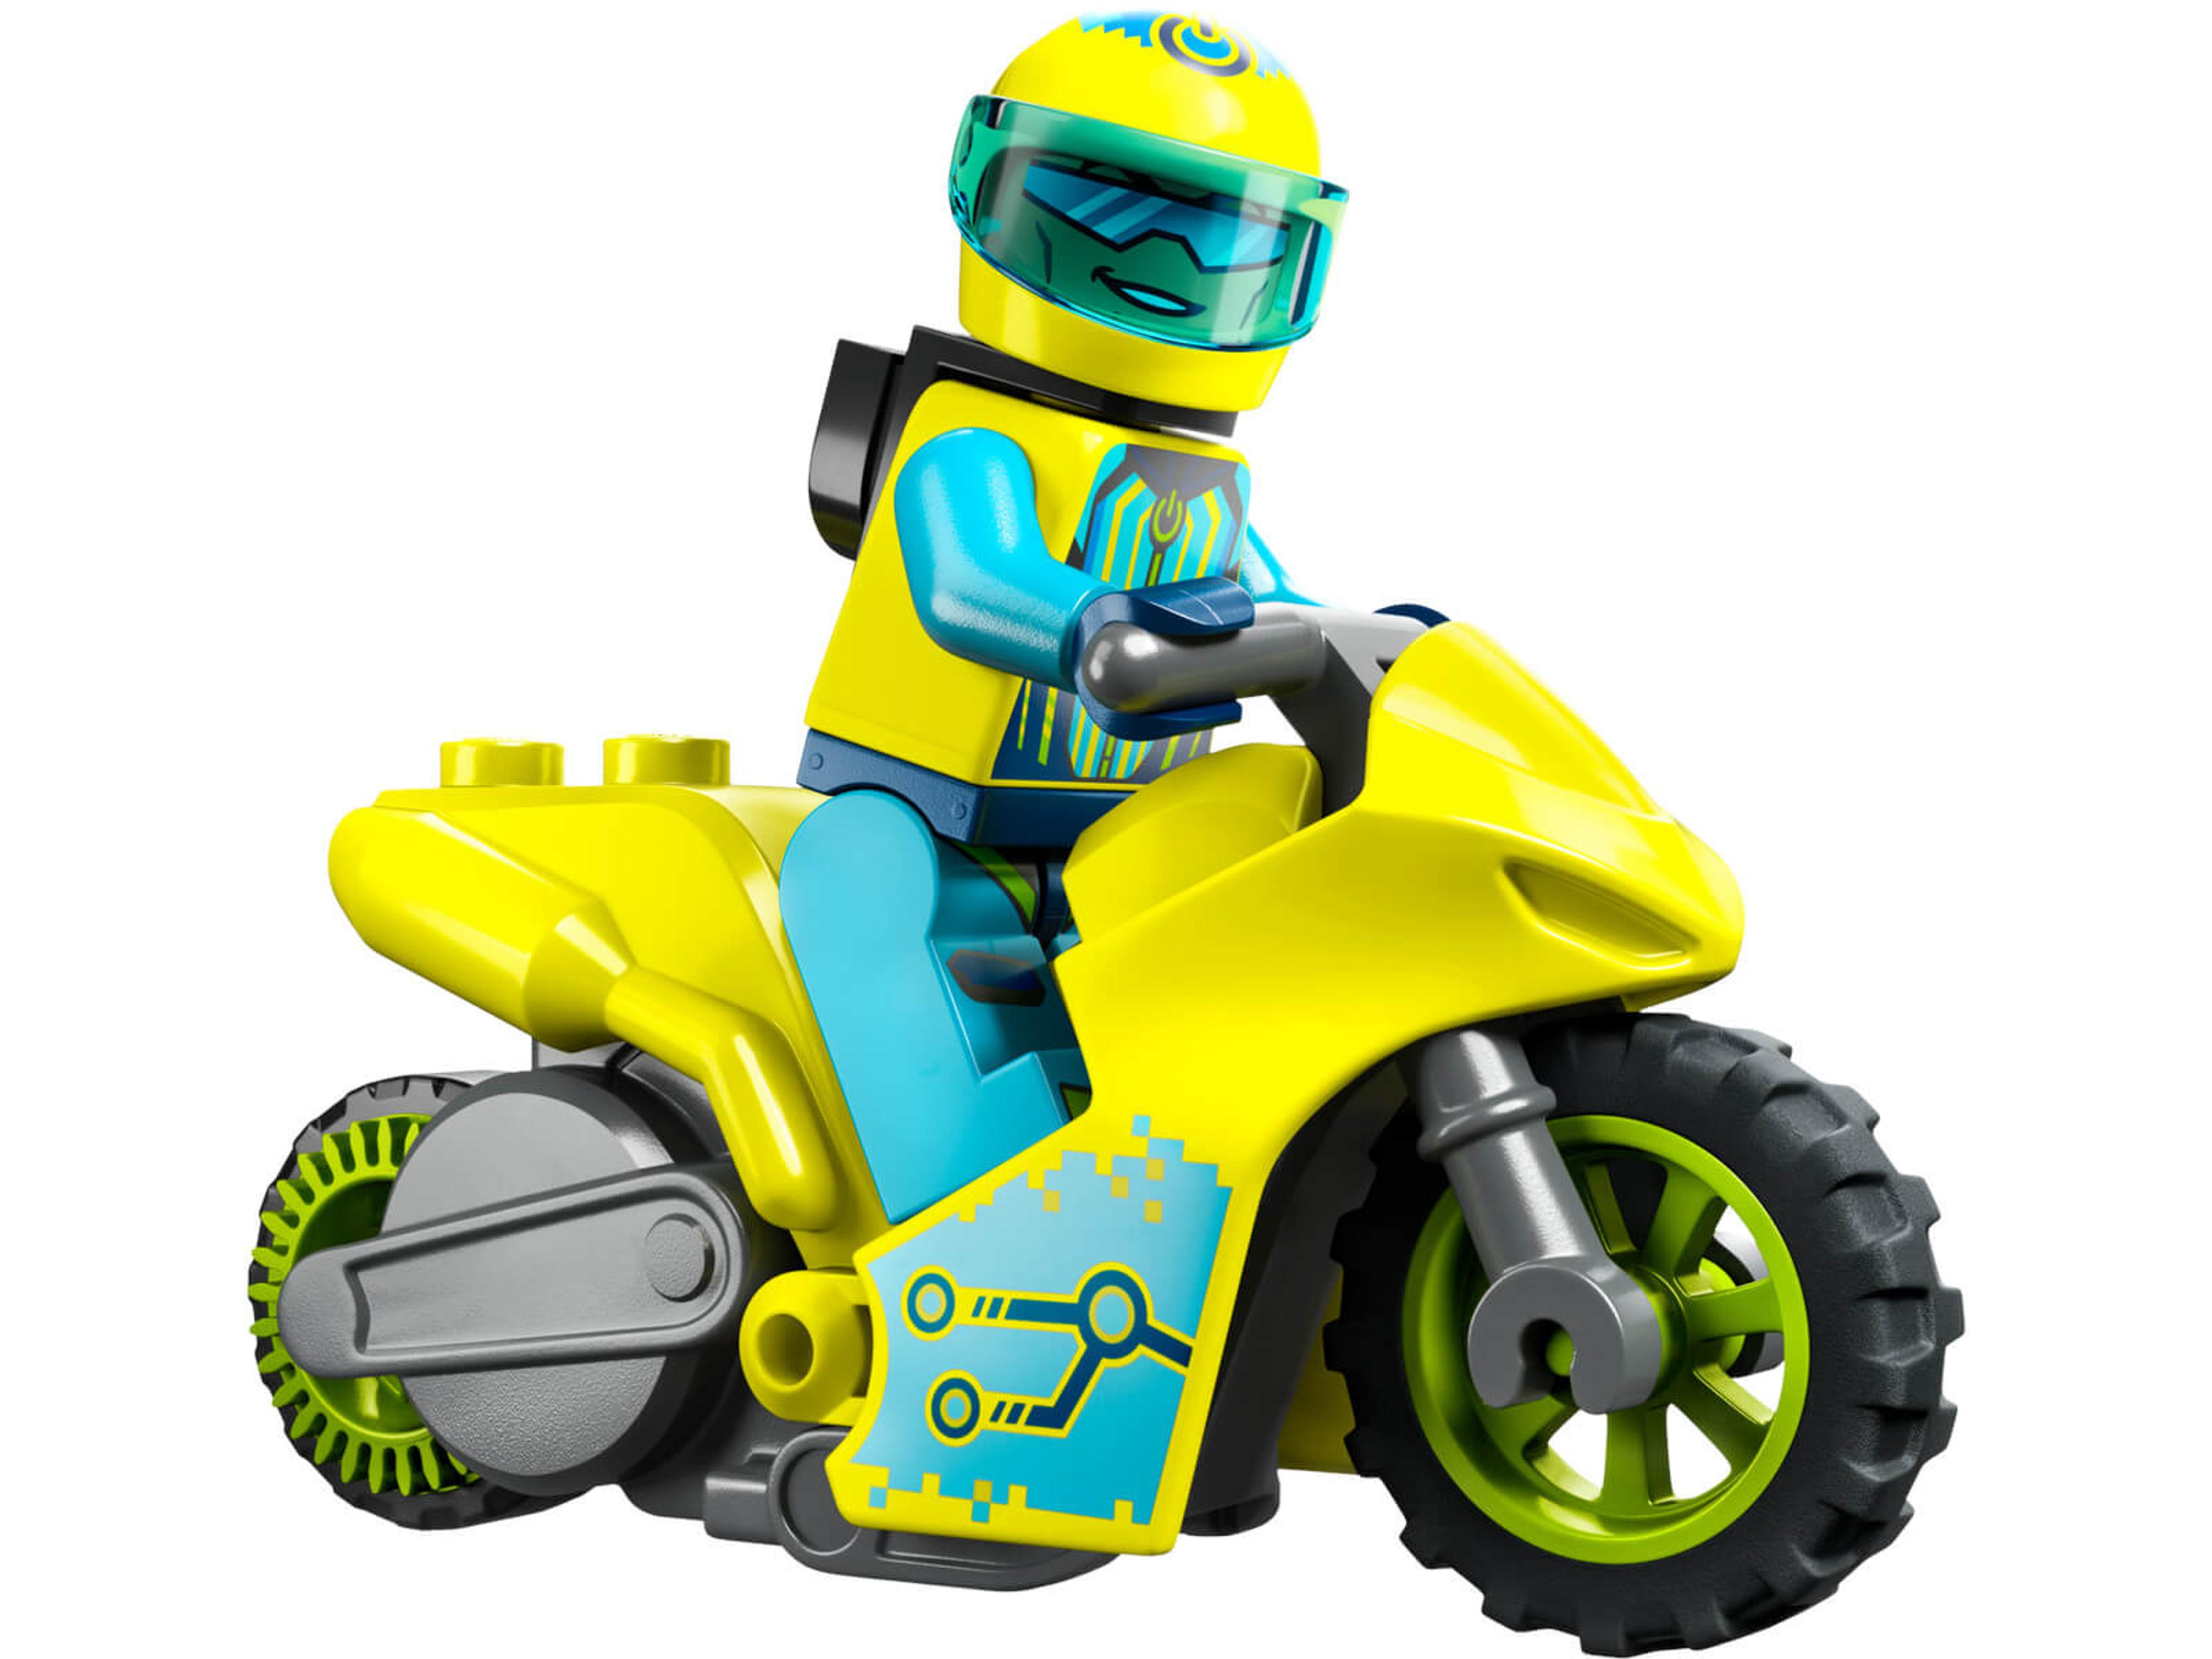 LEGO City Stuntz - Cyber Stunt Bike